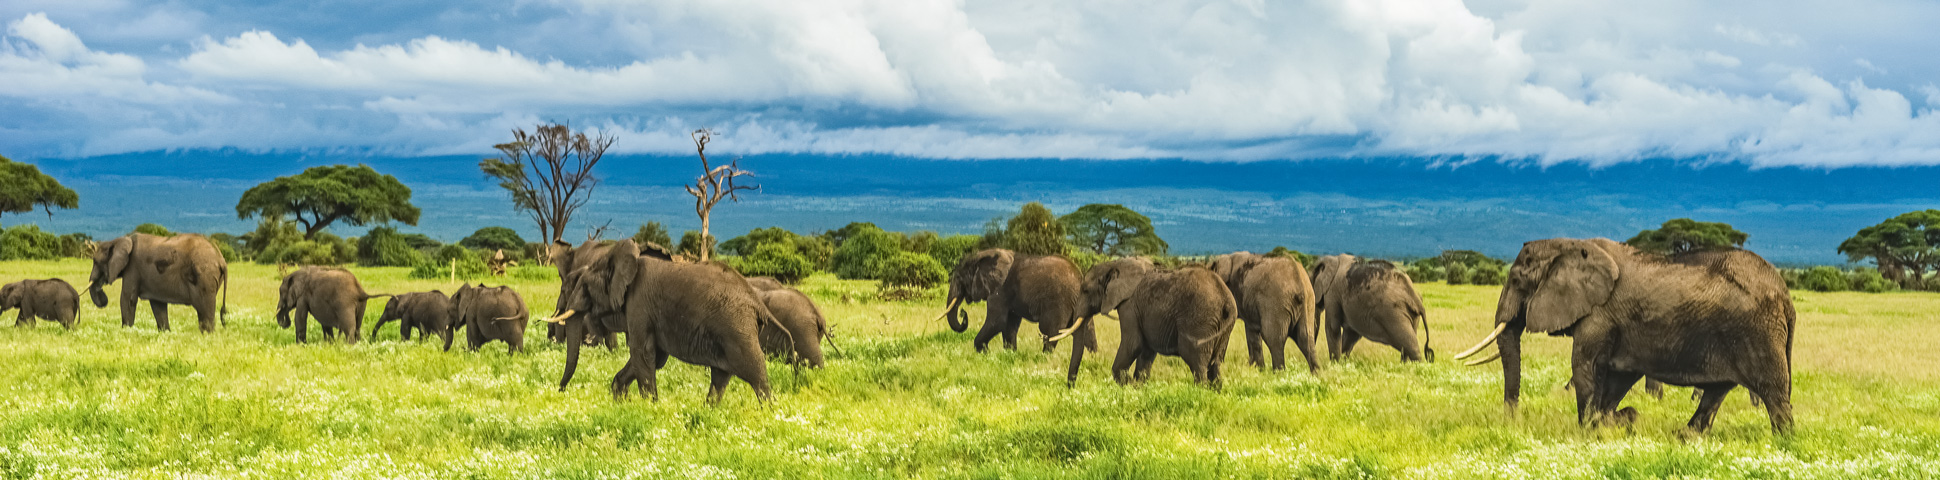 Panoramic view from Great Migration Safari Tour